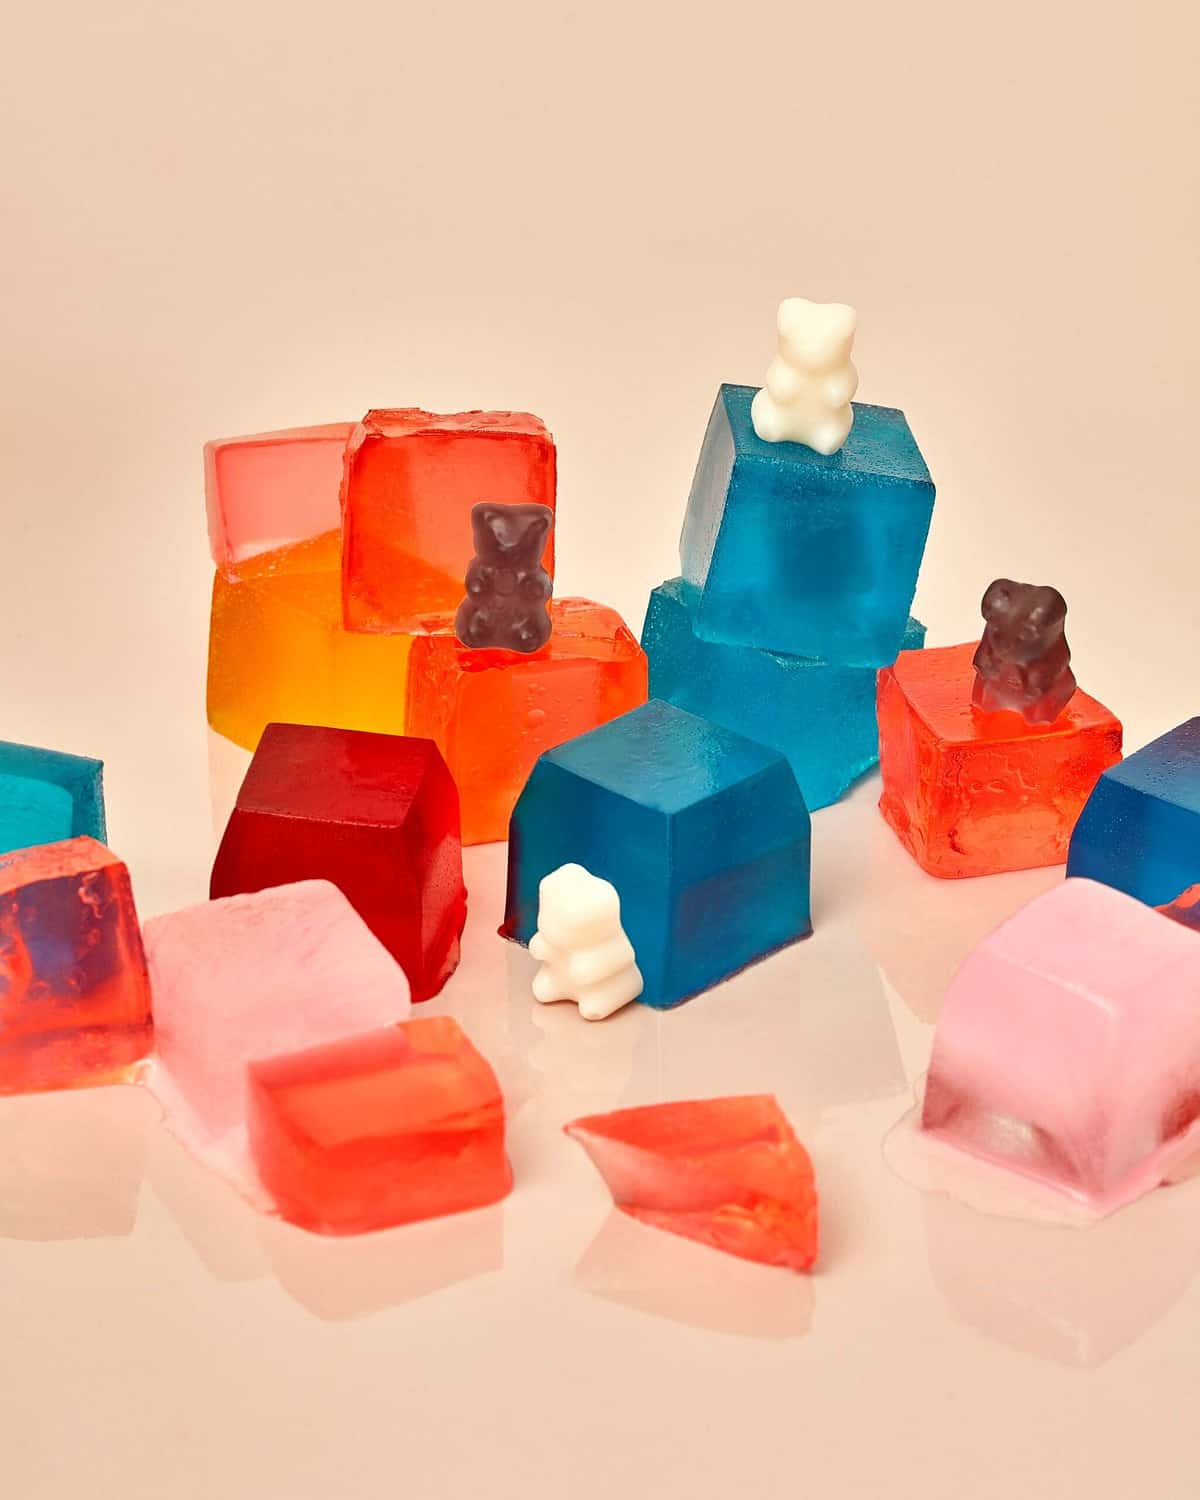 Several gummy bears sitting on jello. 